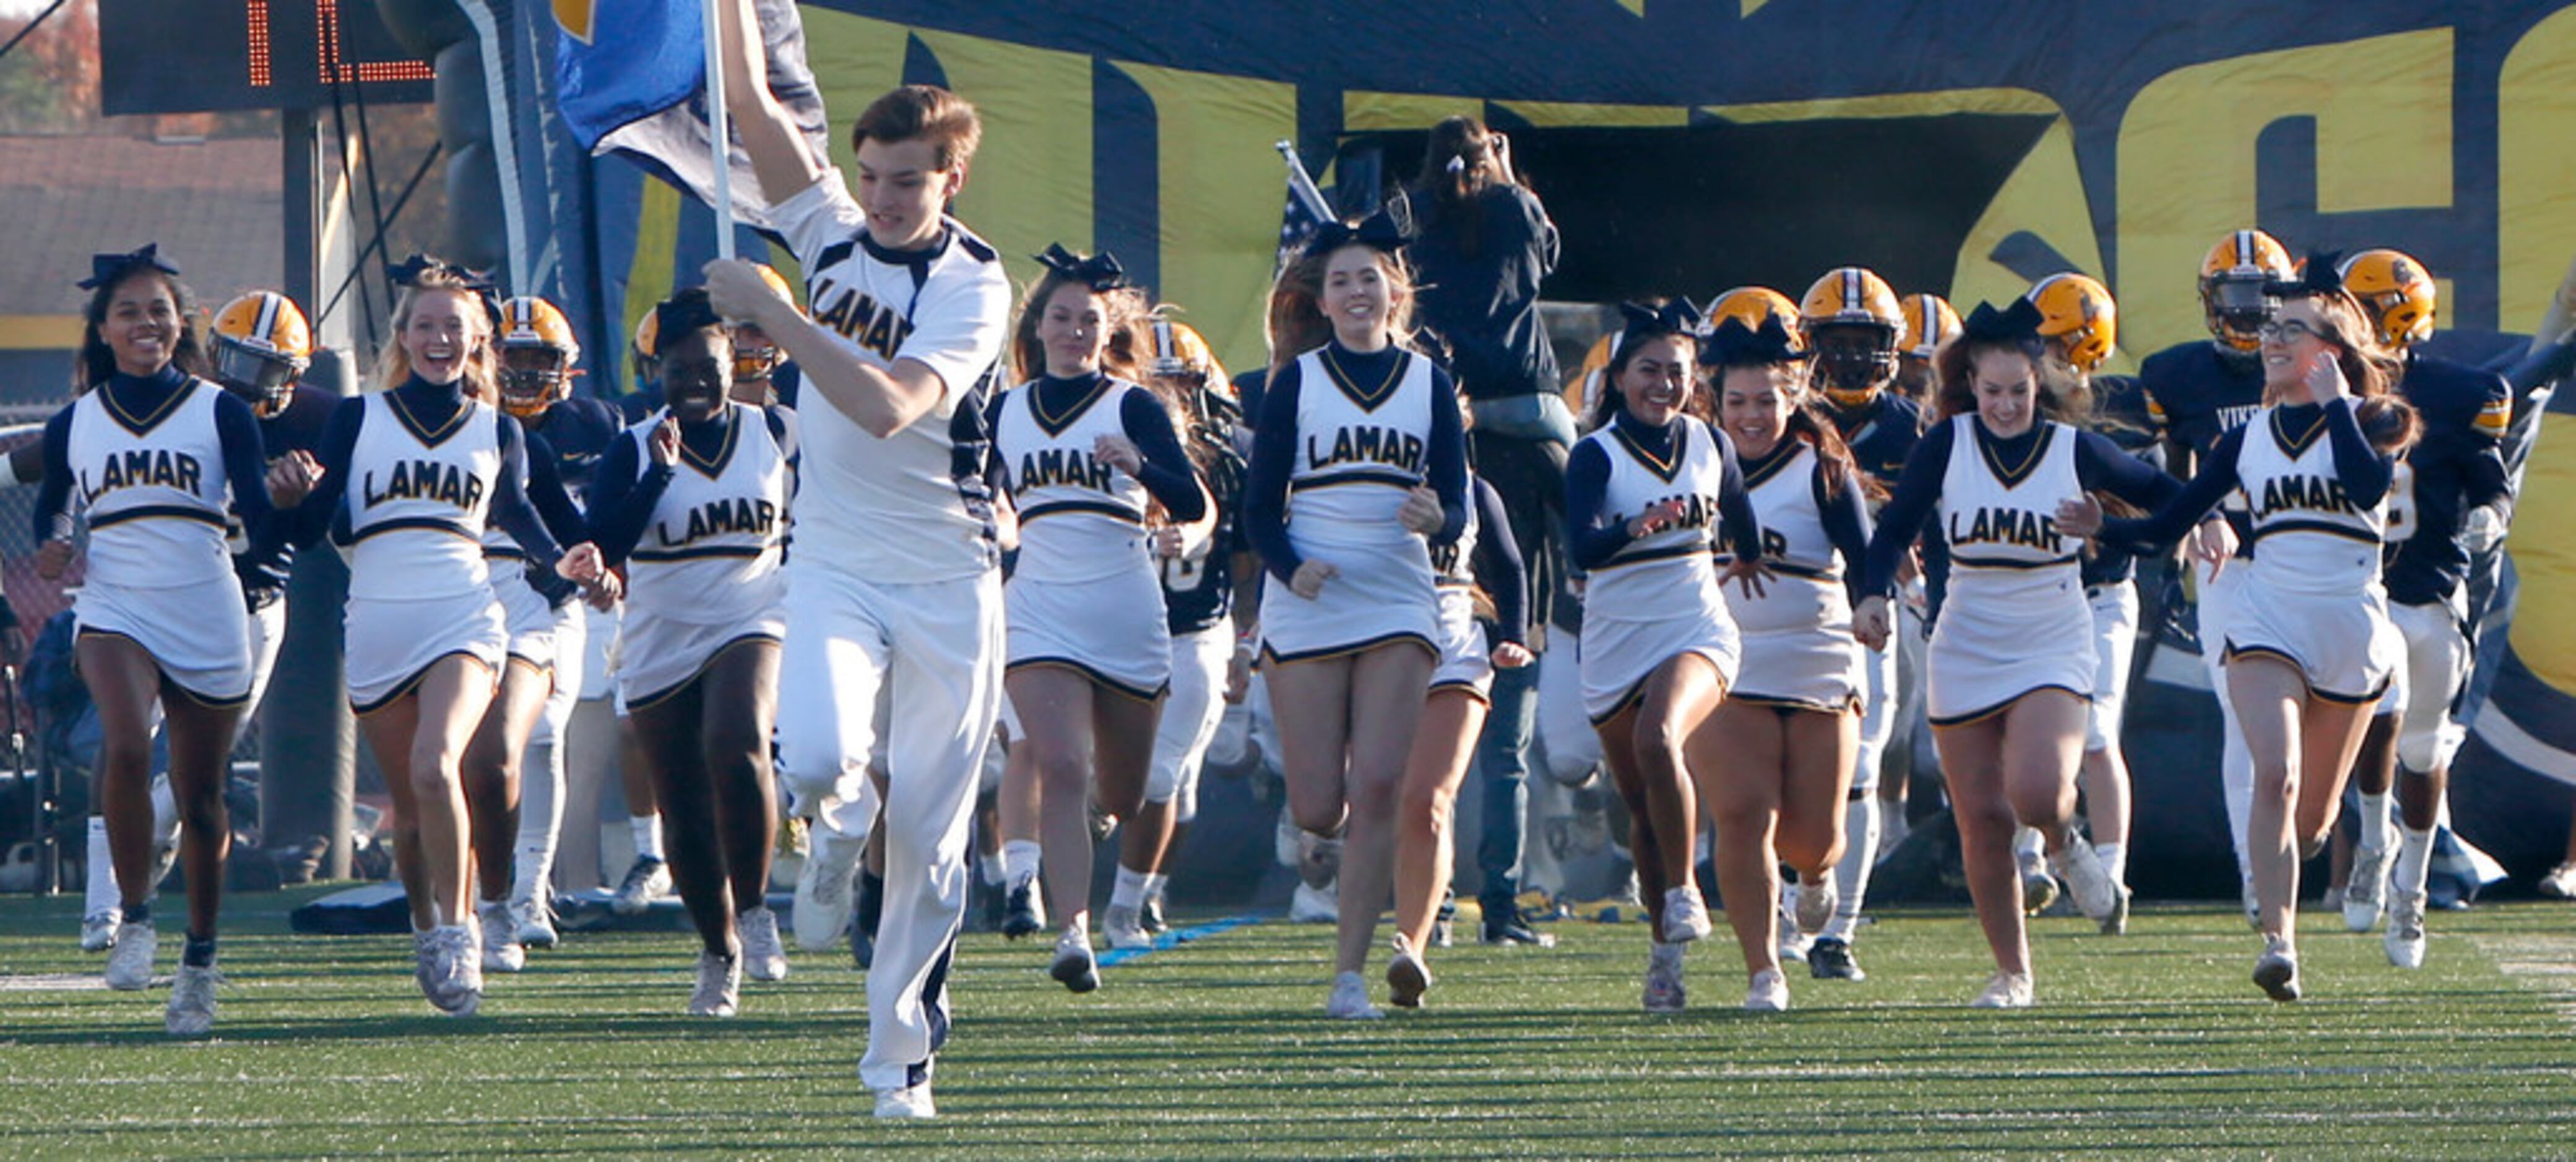 Members of the Arlington Lamar cheerleaders storm the field as they lead Vikings players...